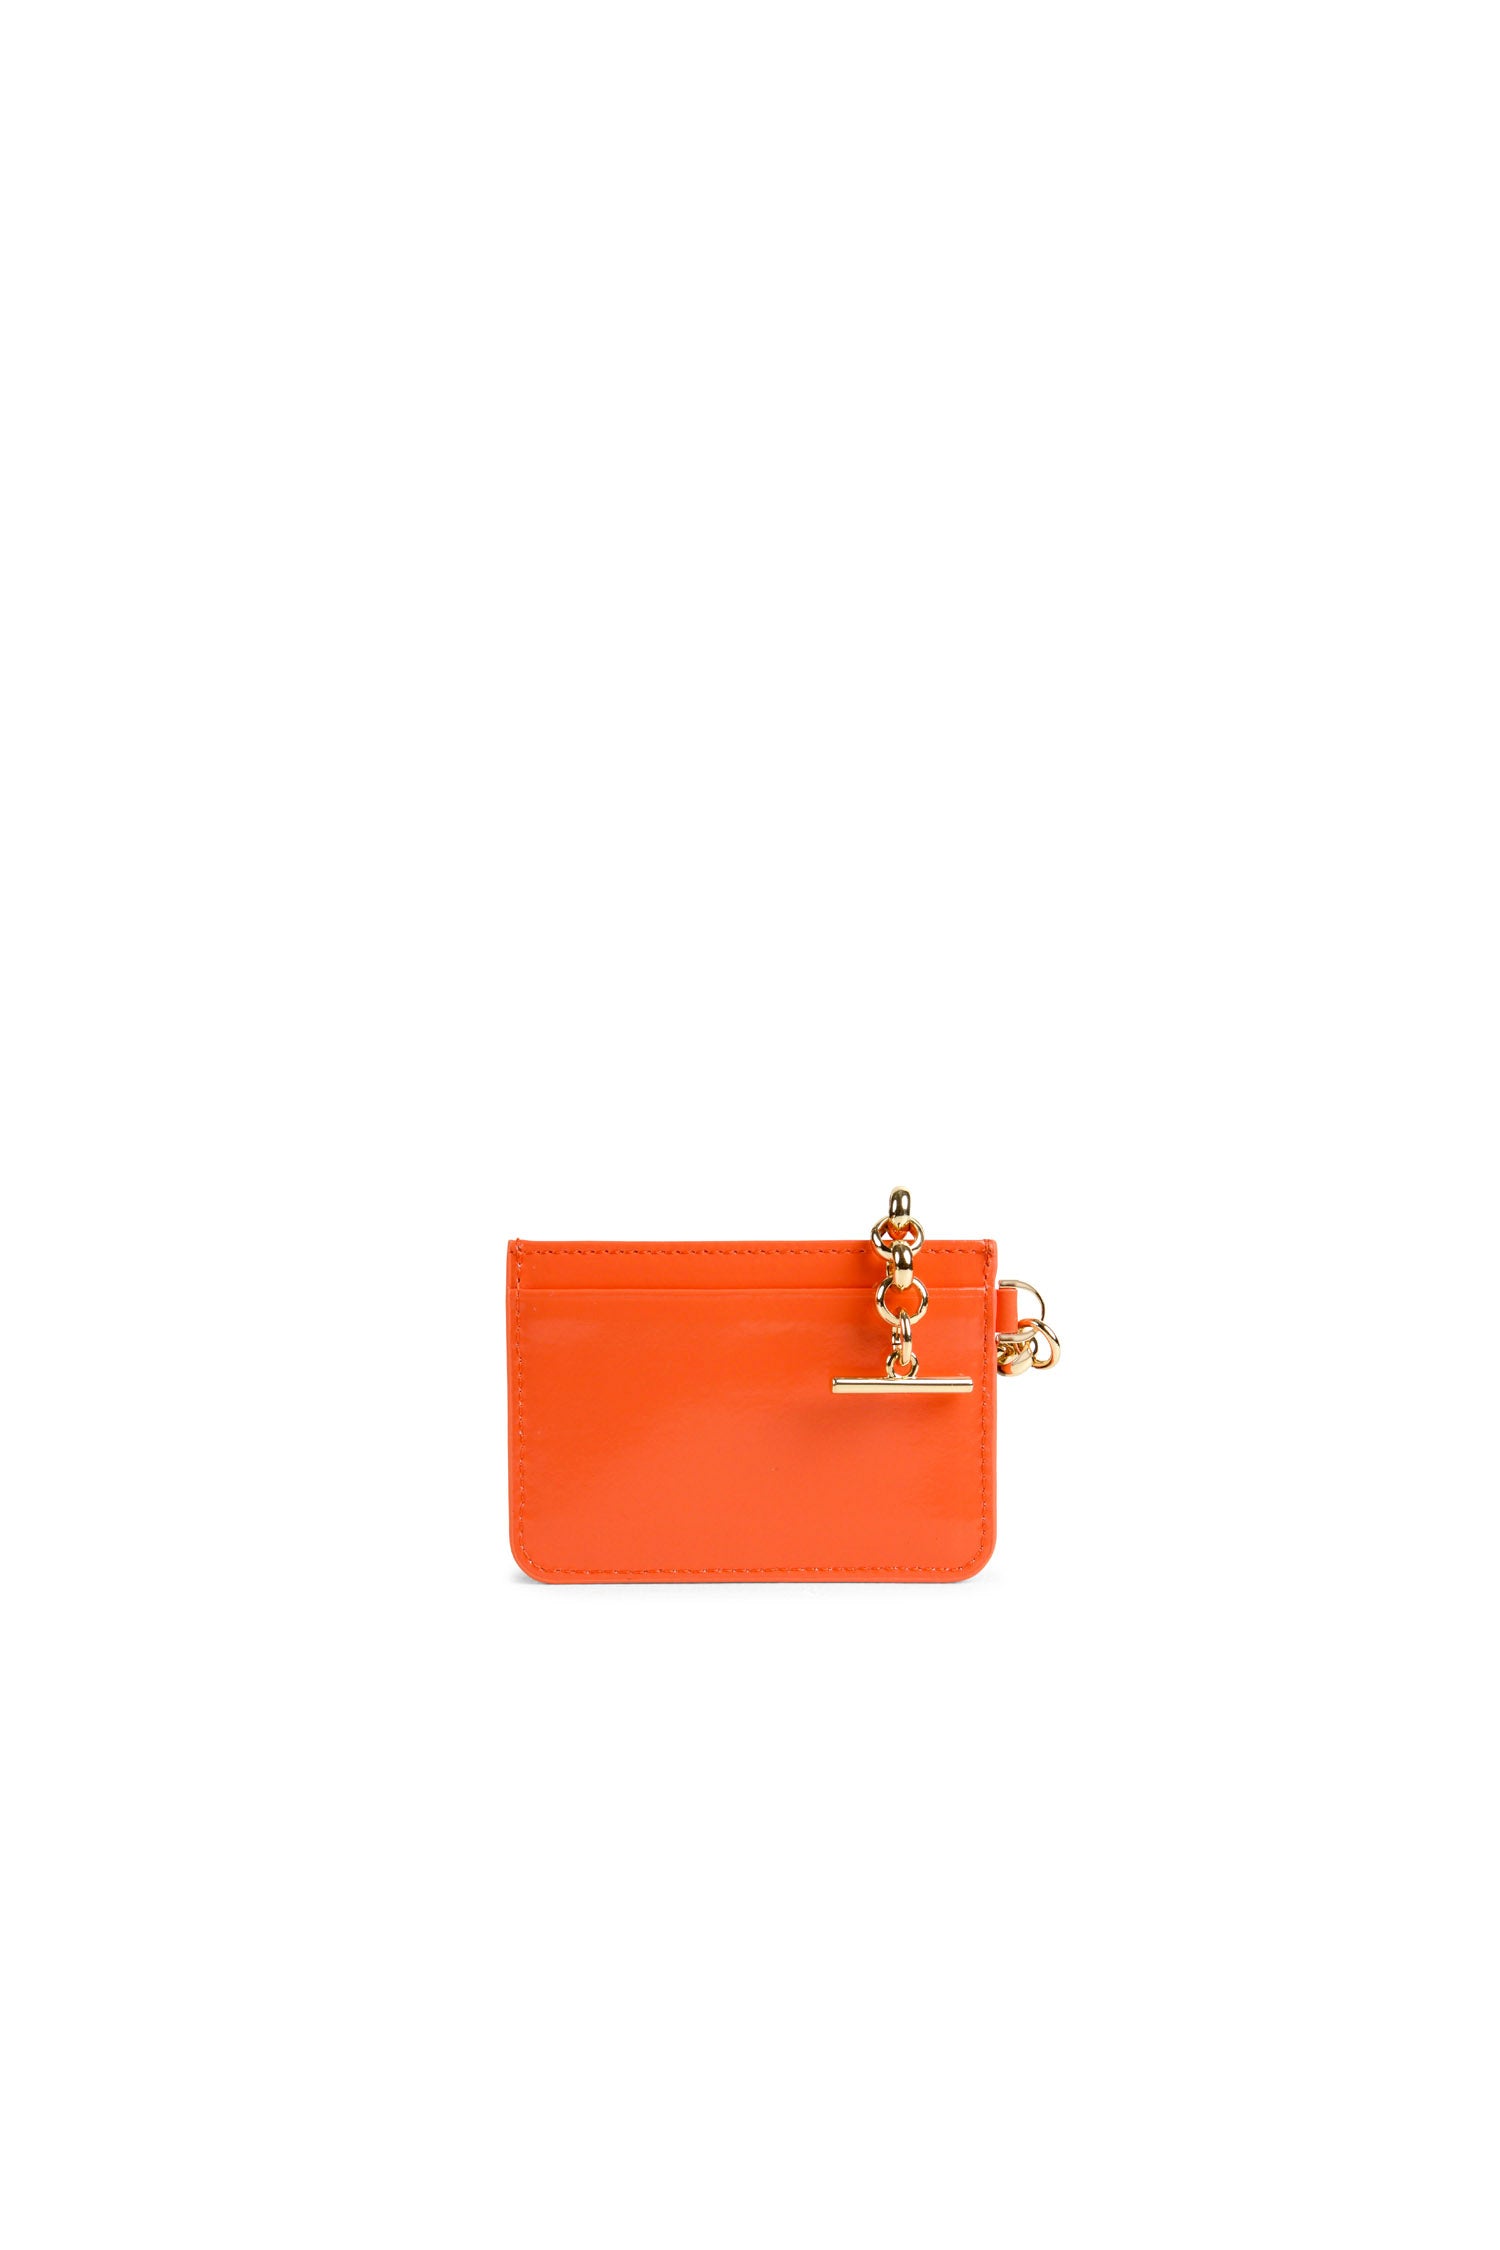 The Yumi Card Holder Orange Sunset